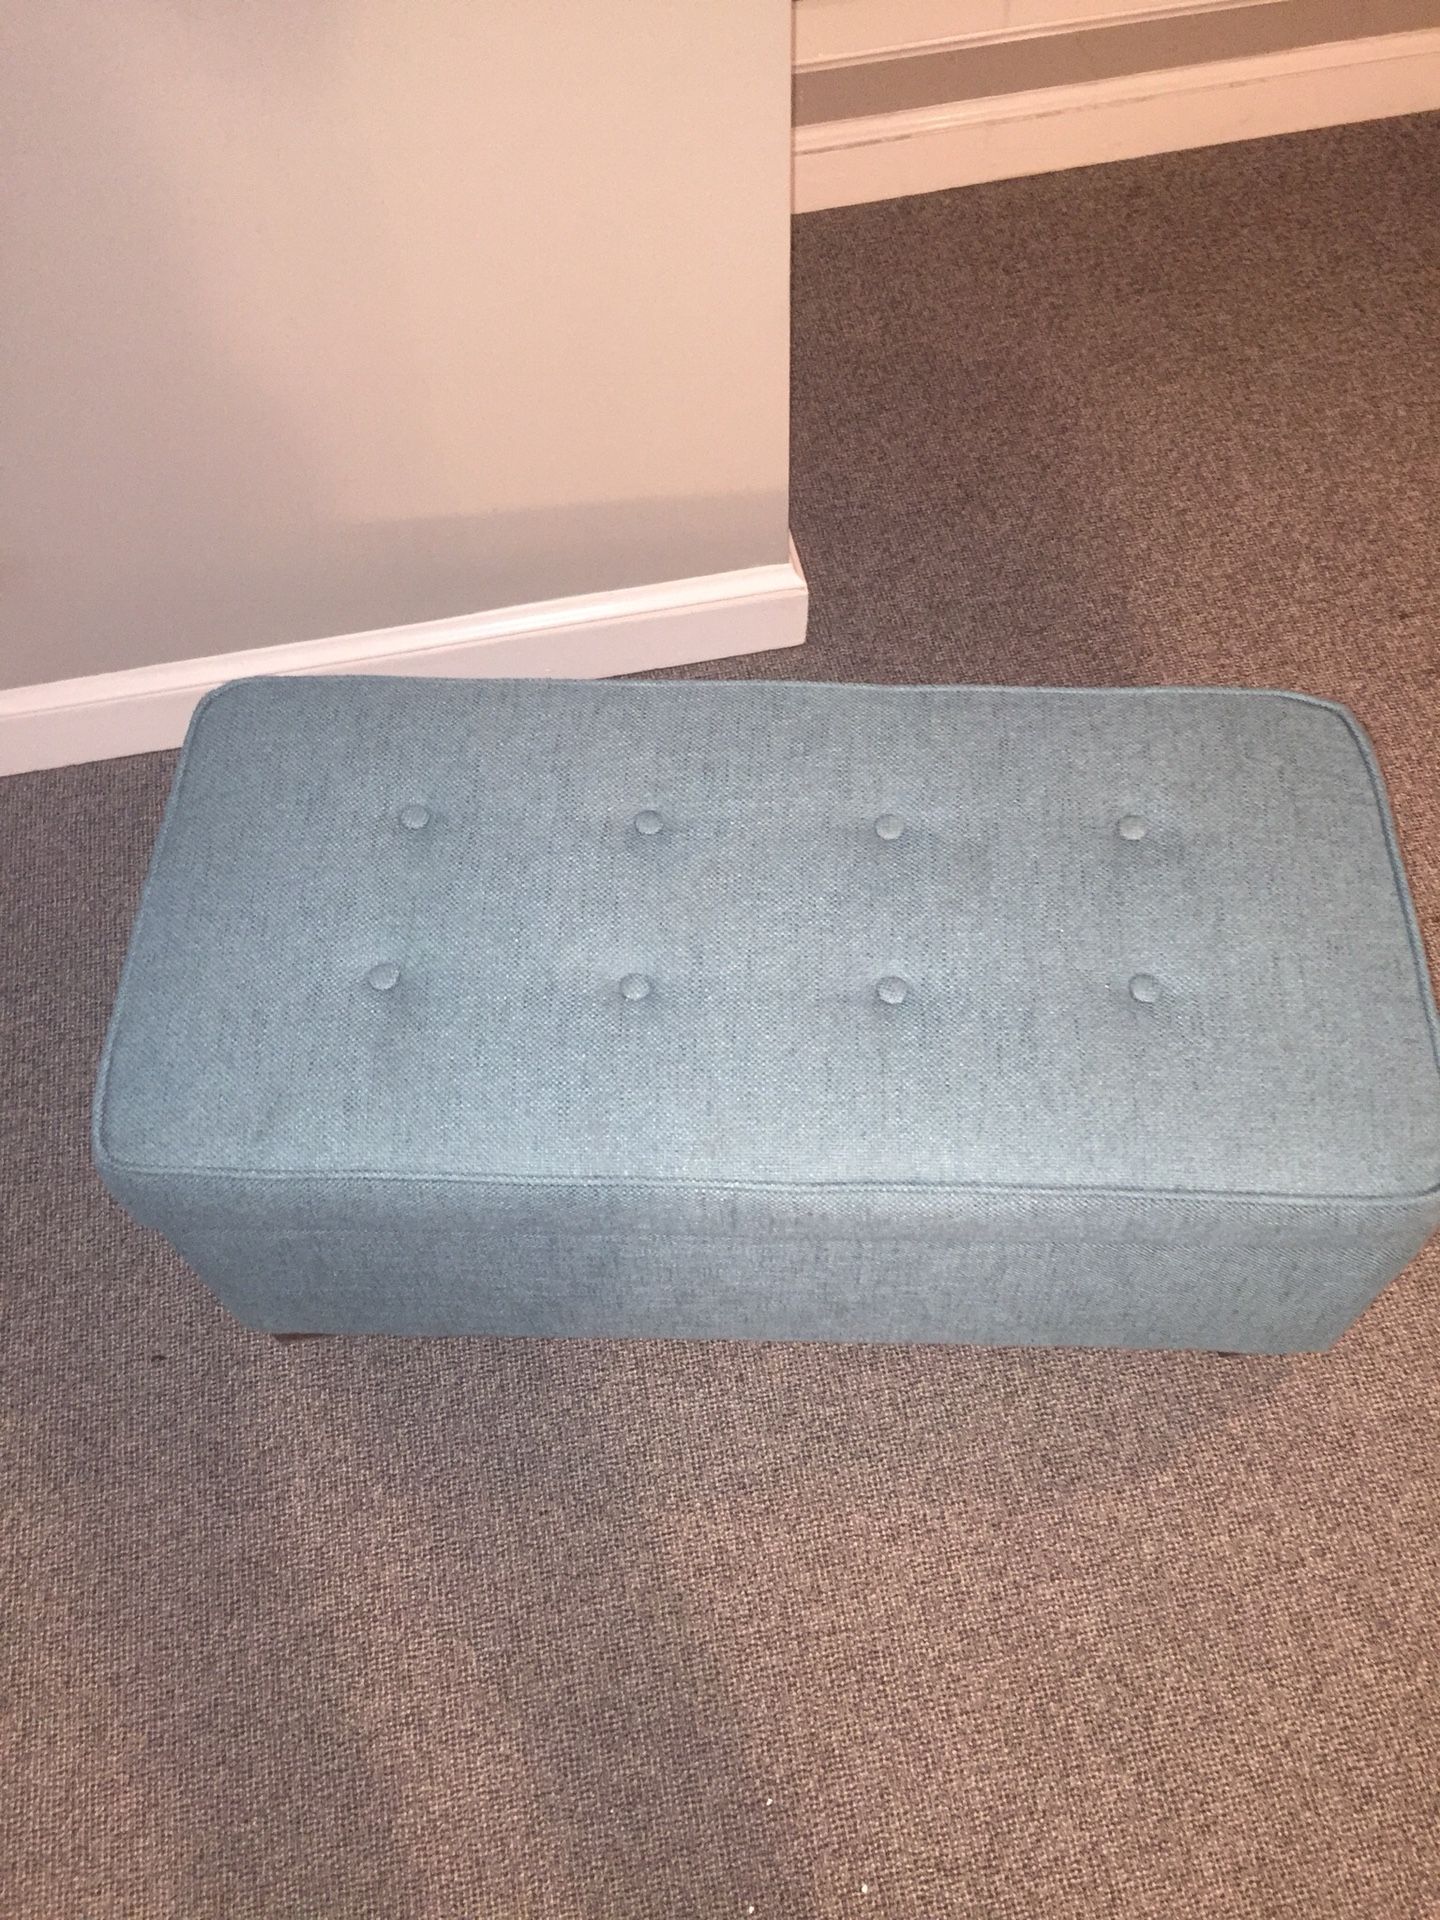 Upholstered storage bench